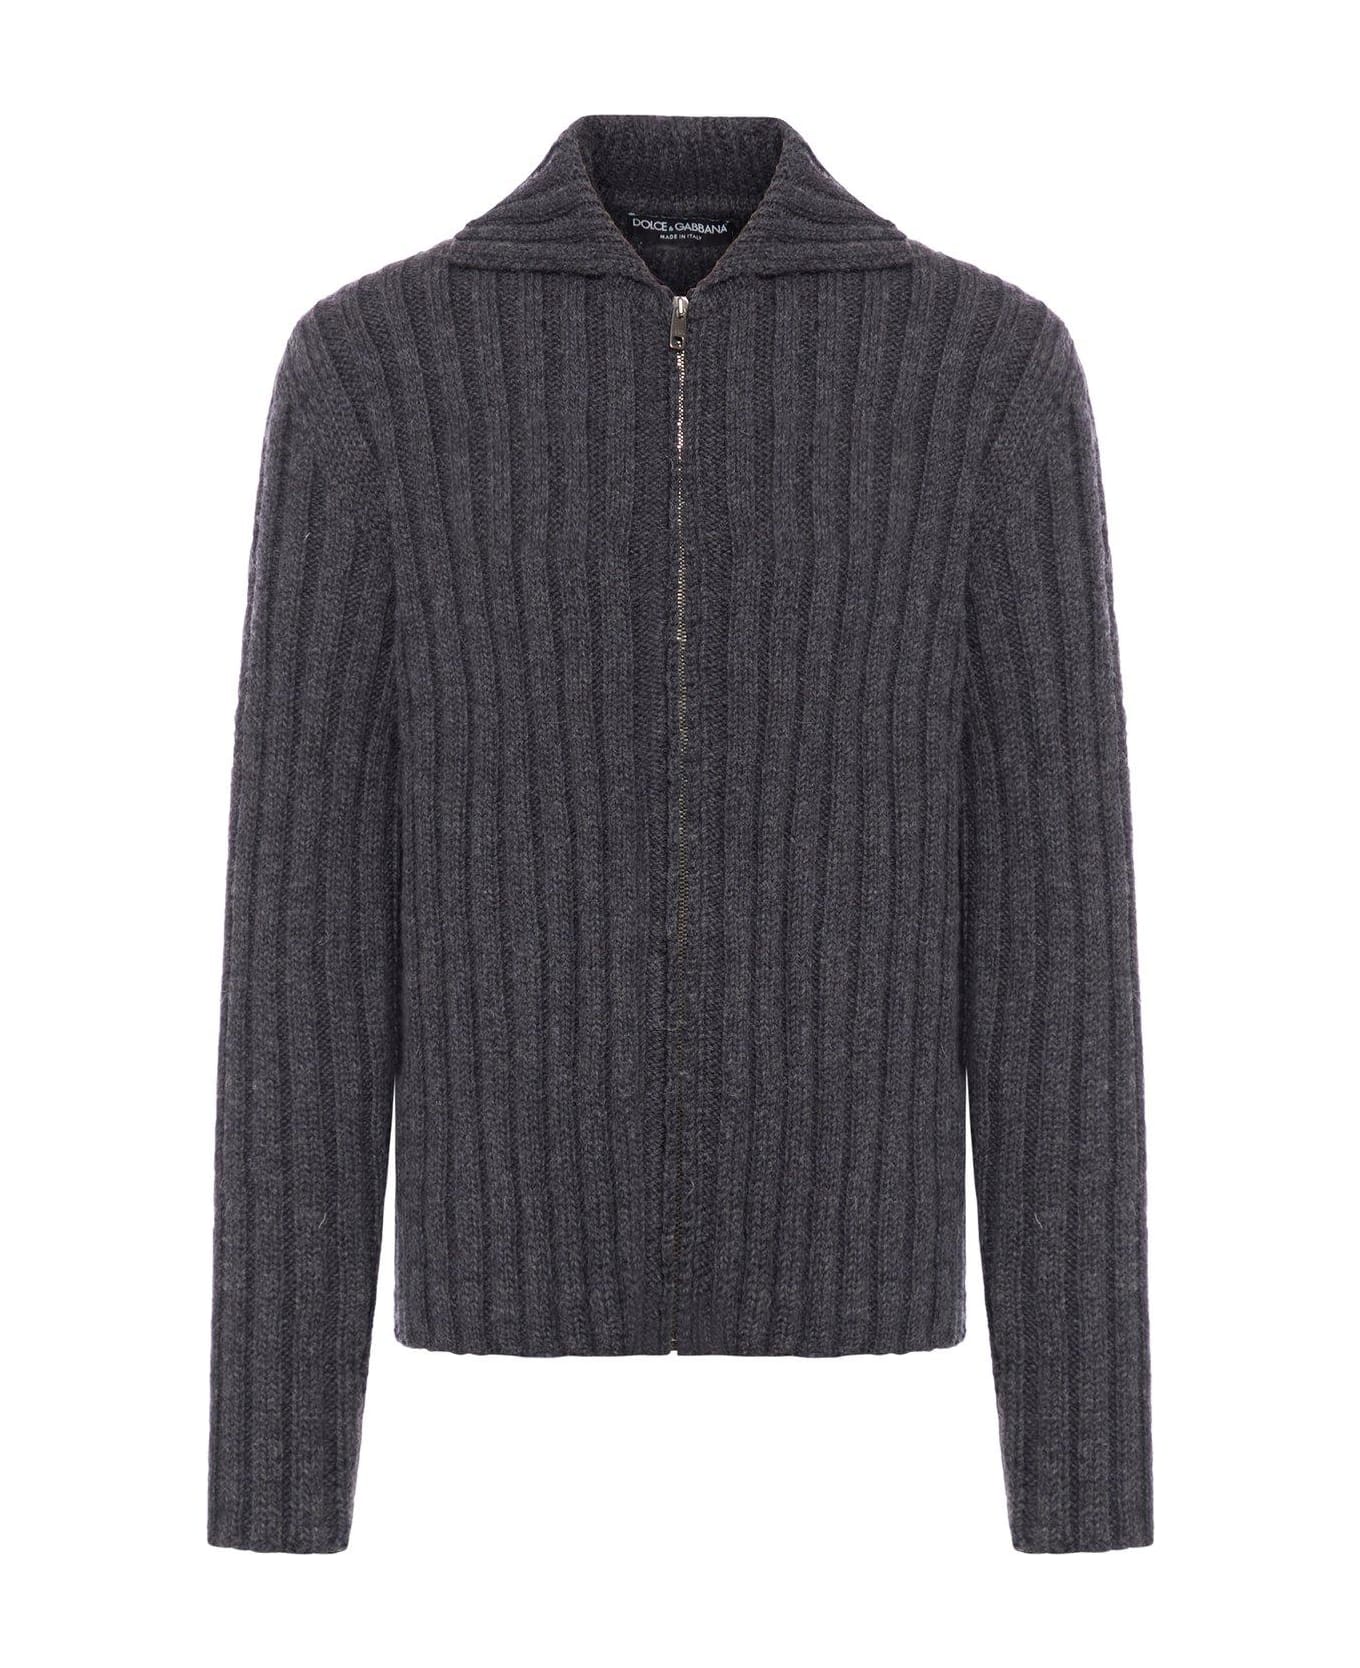 Dolce & Gabbana Zipped Knitted Sweater